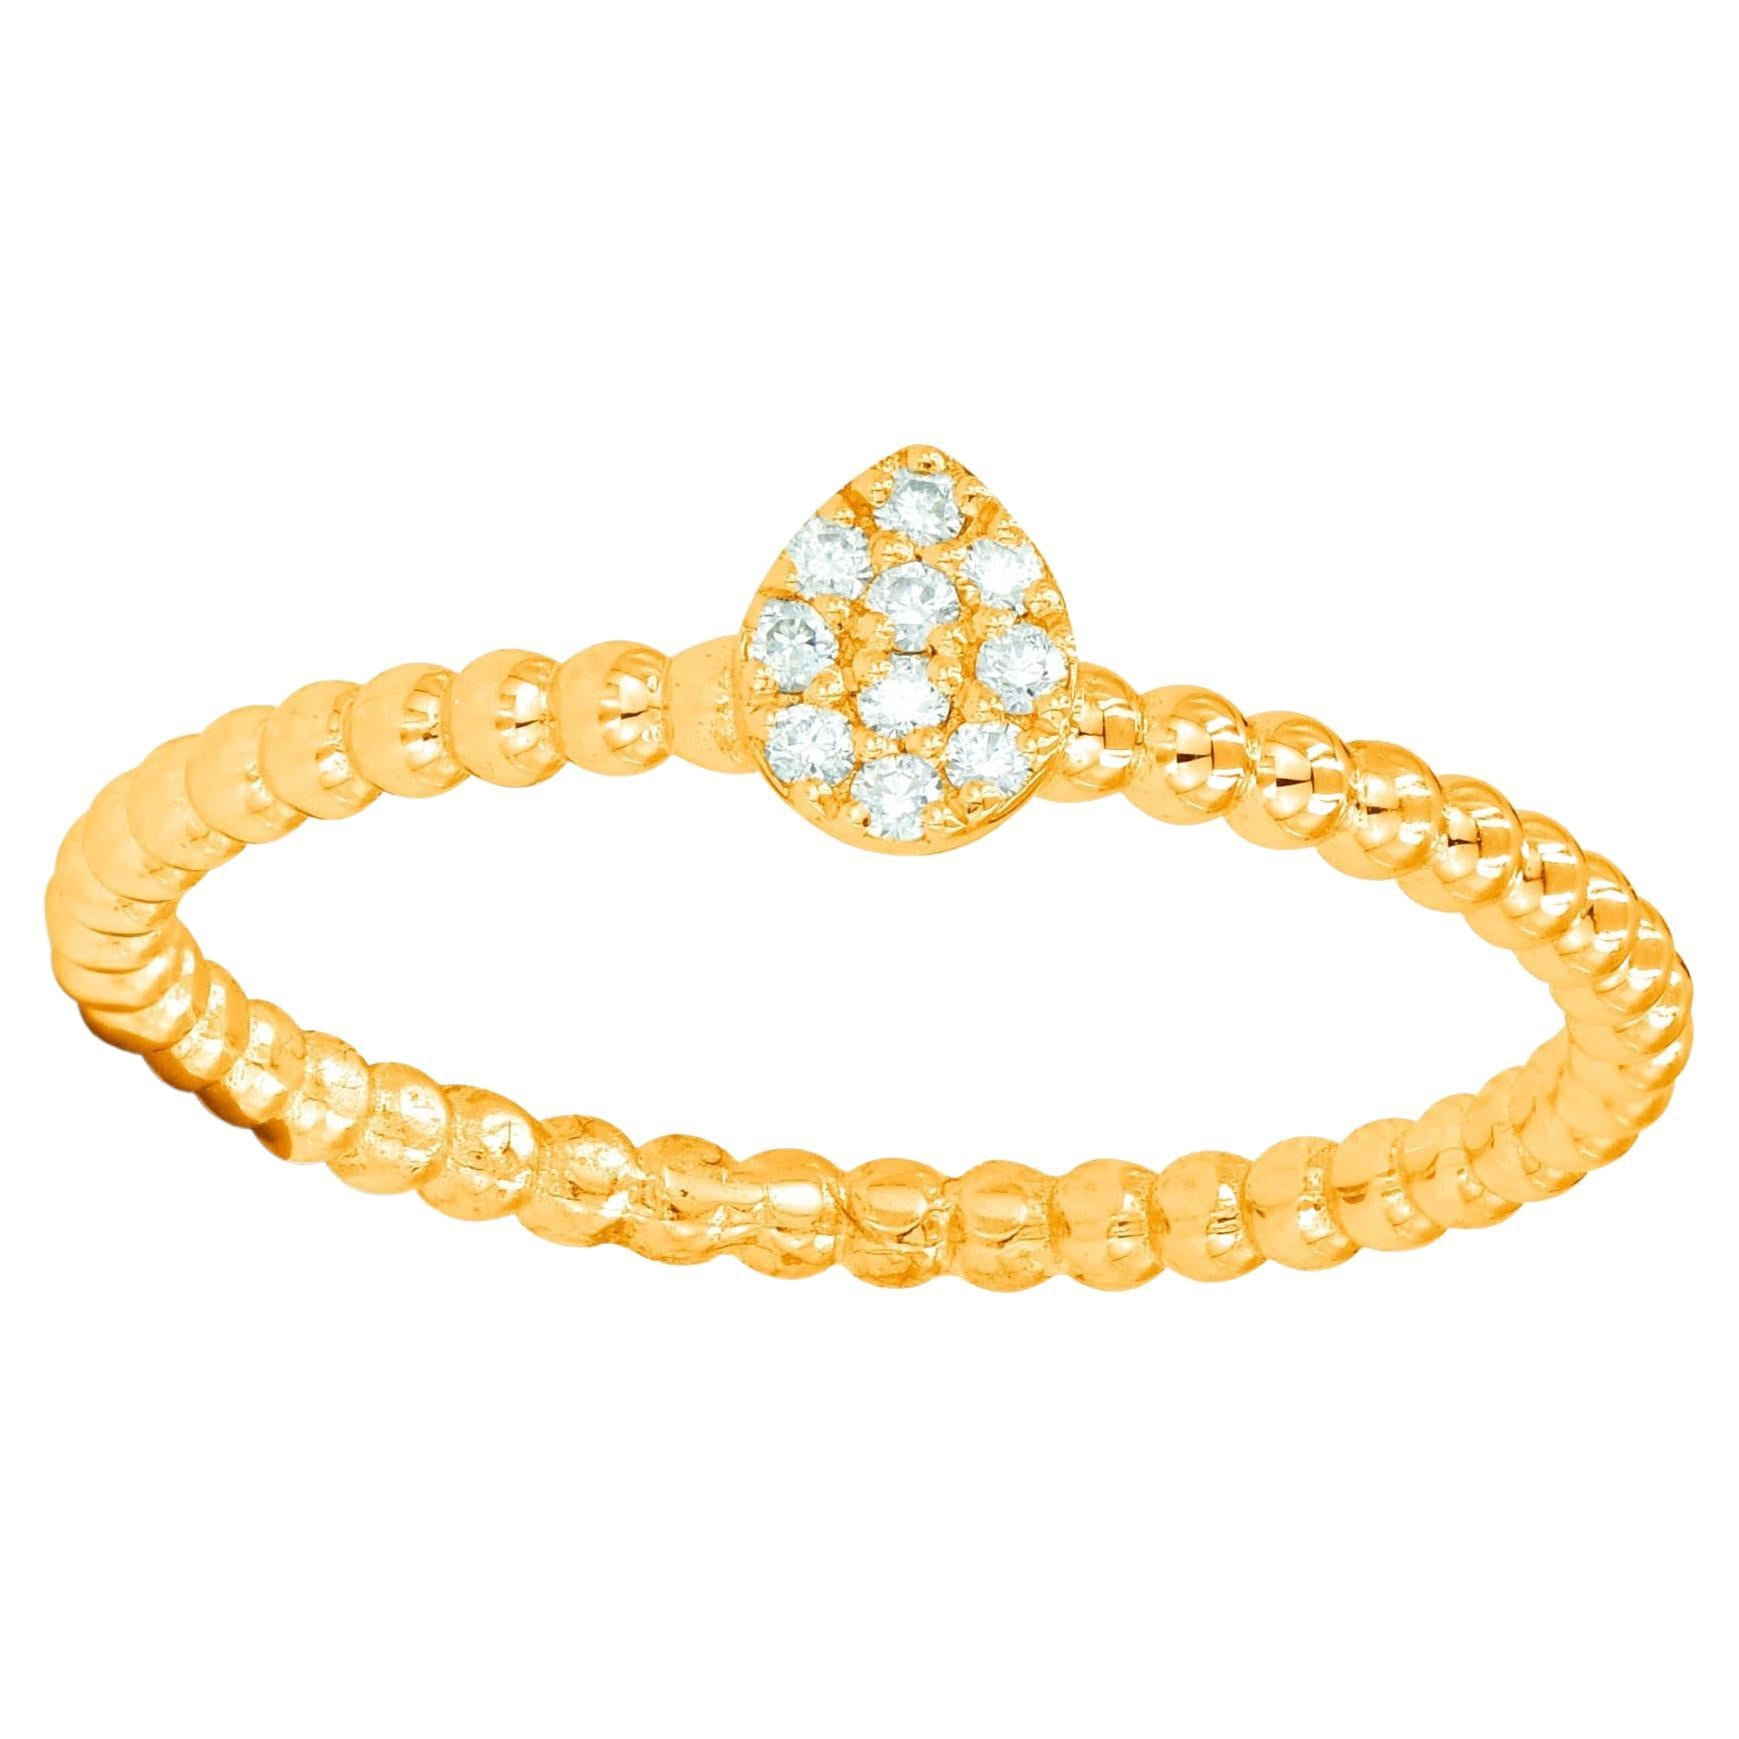 14k Gold Pear Shaped Diamond Ring Diamond Wedding Ring Pave Cluster Diamond Ring